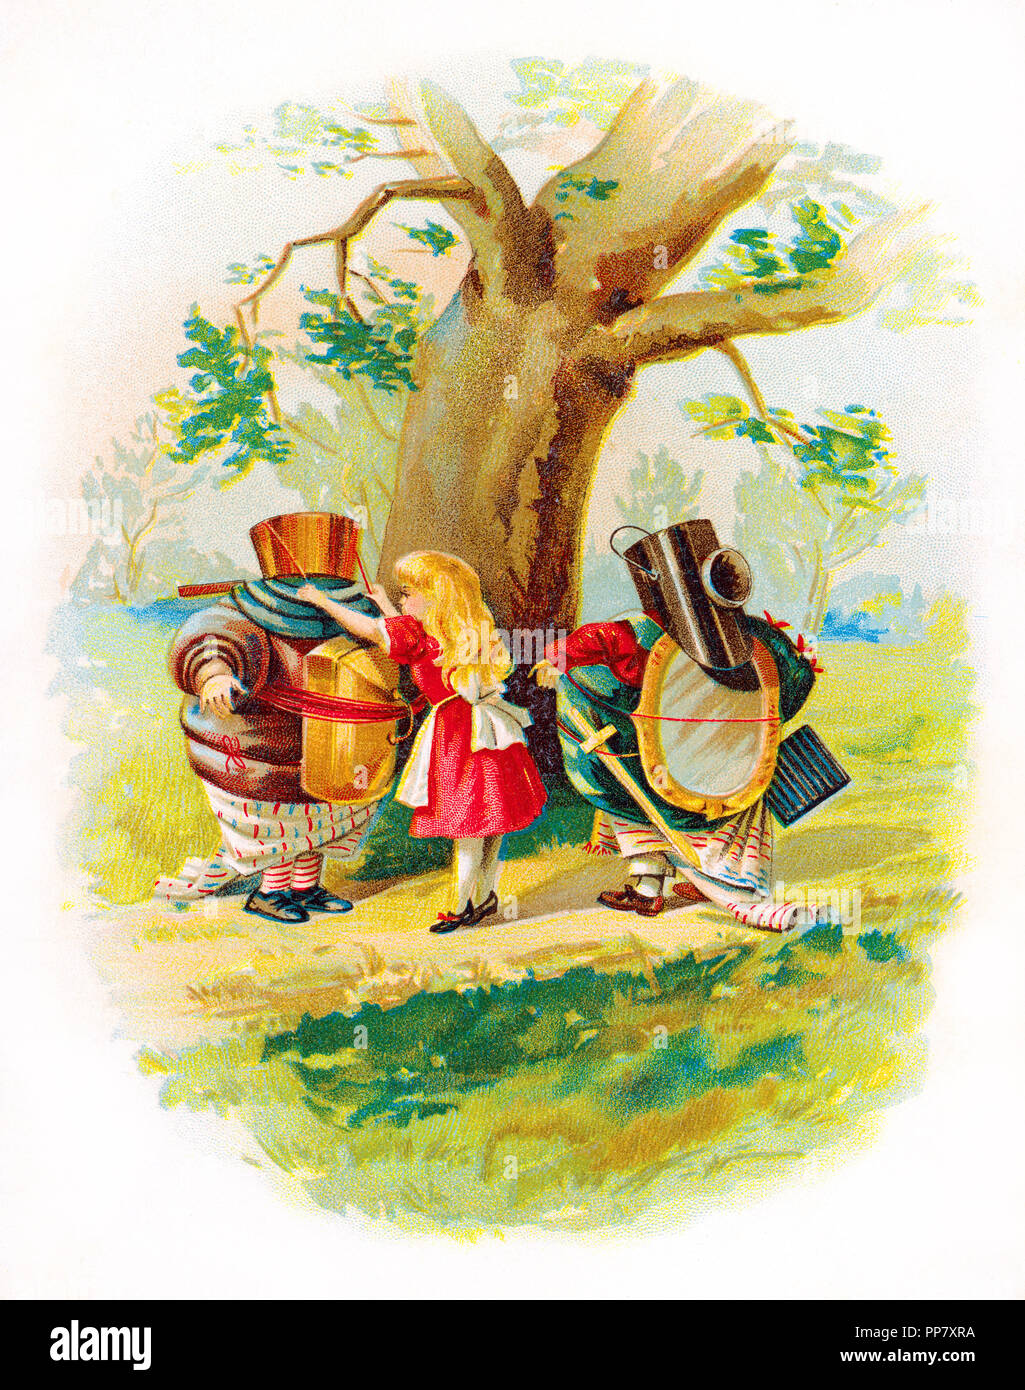 Alice in Wonderland with Tweedle Dee and Tweedle Dum Stock Photo